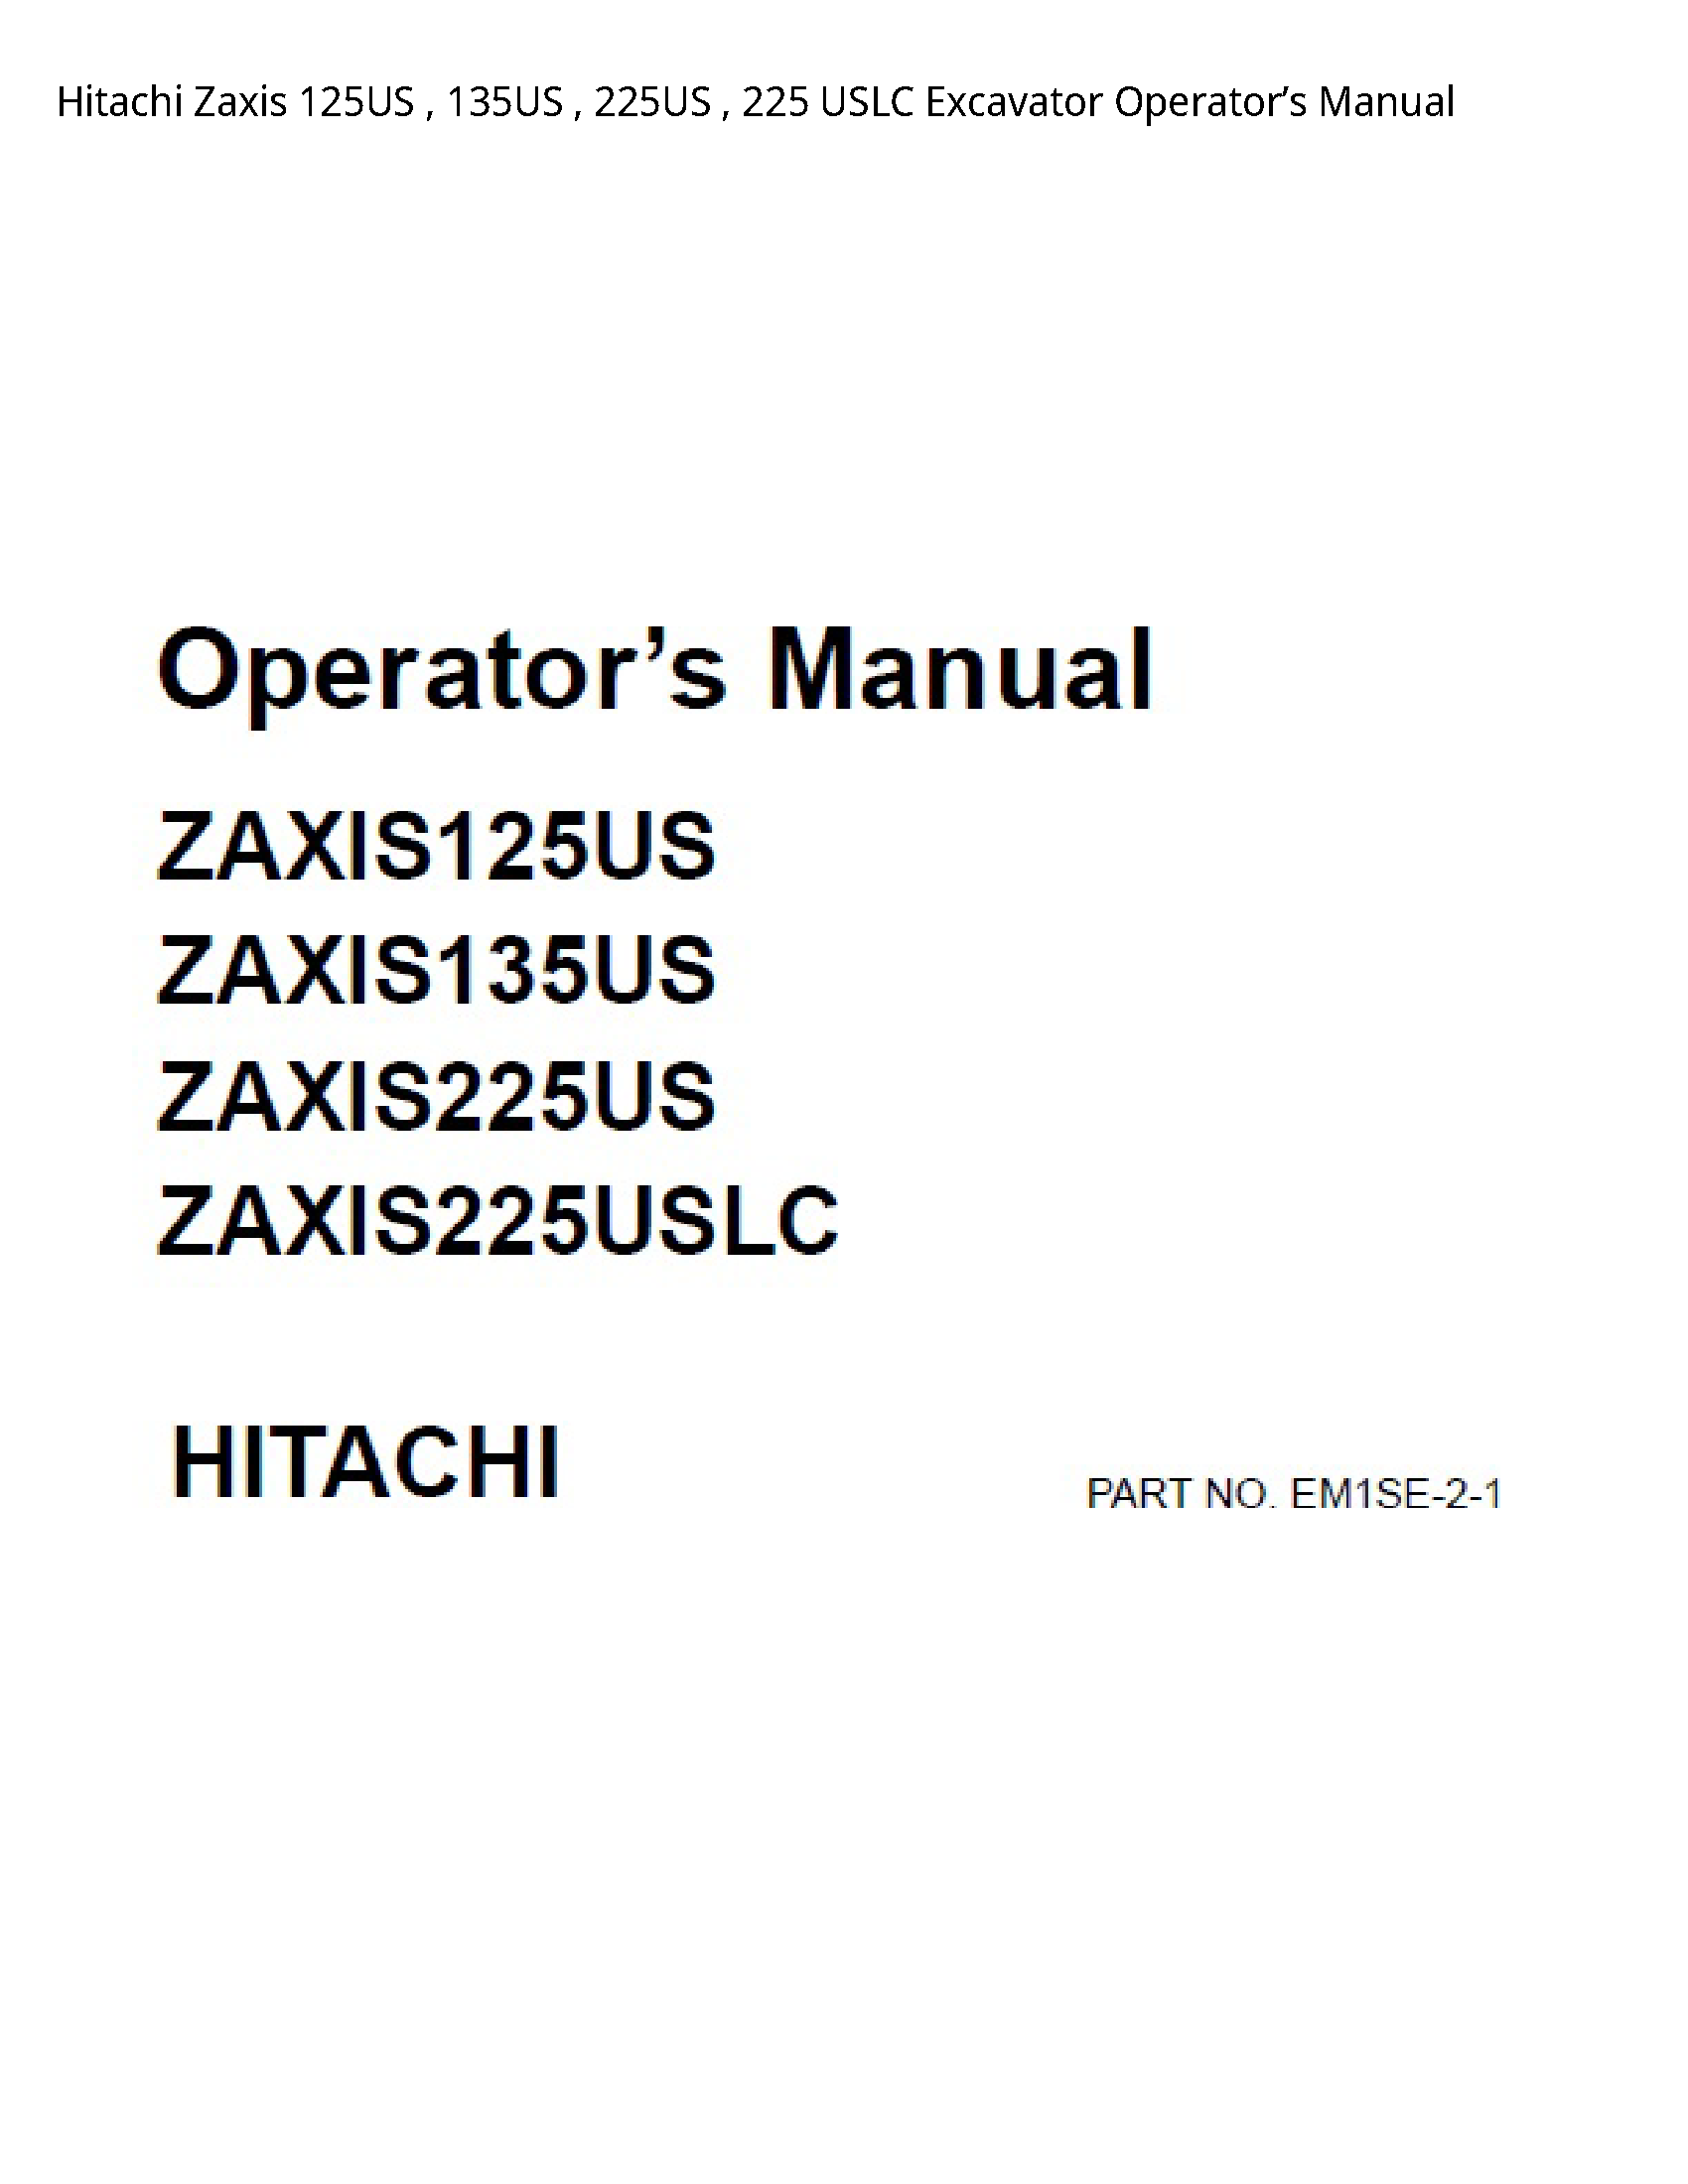 Hitachi 125US Zaxis USLC Excavator Operator’s manual